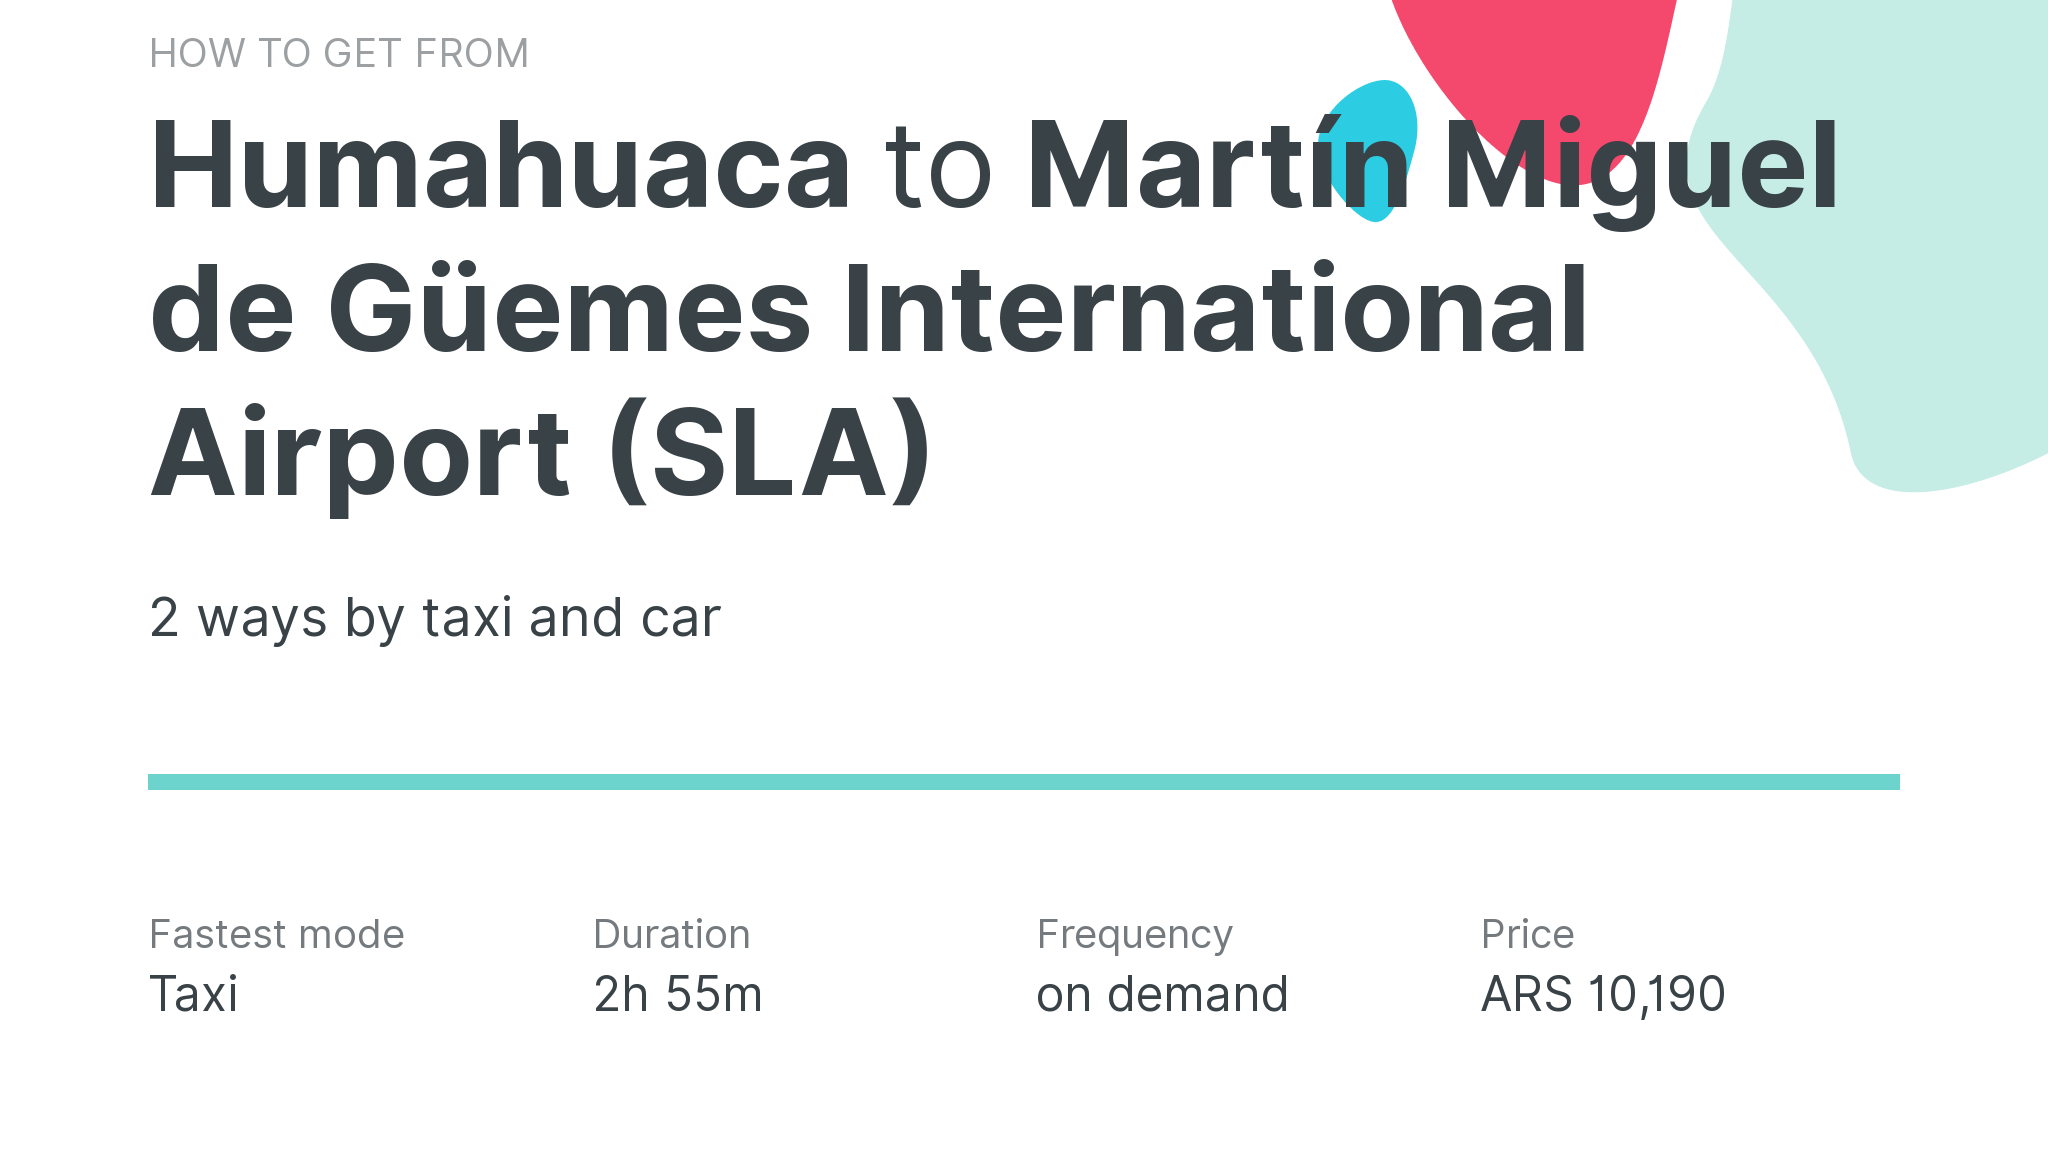 How do I get from Humahuaca to Martín Miguel de Güemes International Airport (SLA)